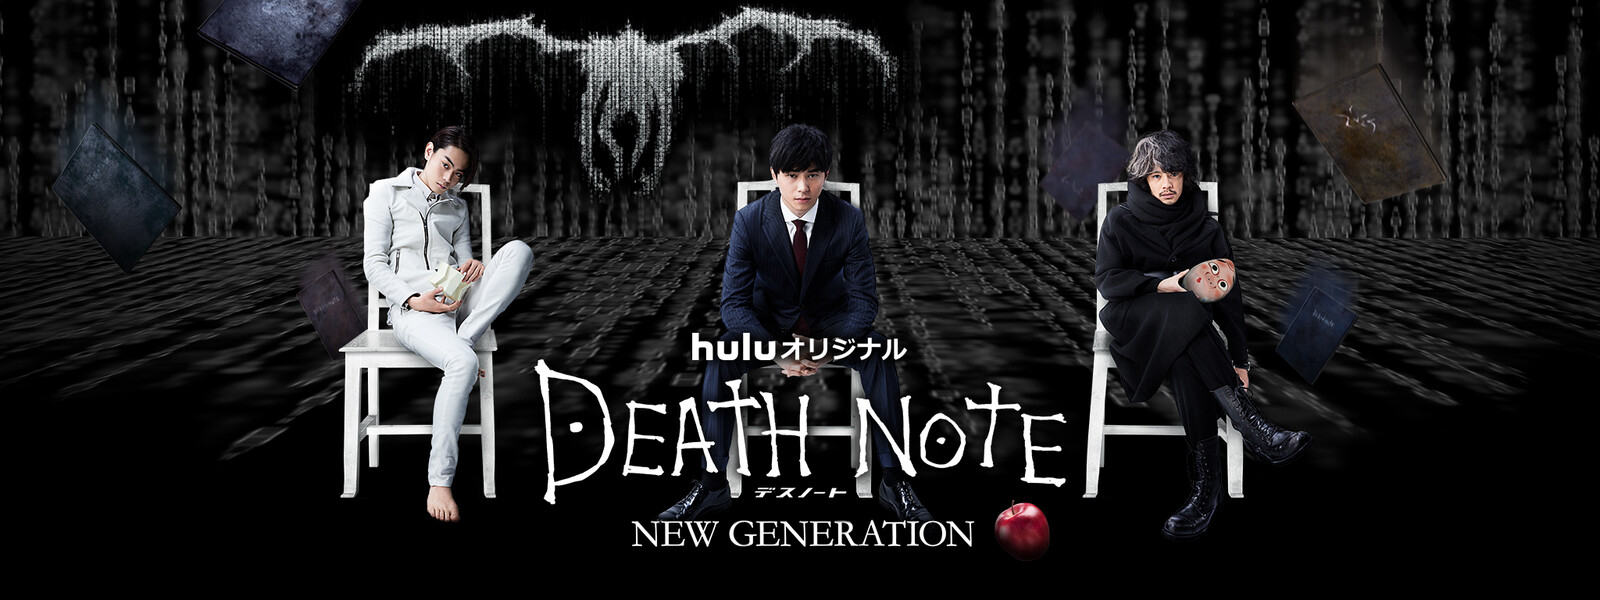 DEATH NOTE デスノート NEW GENERATION 動画